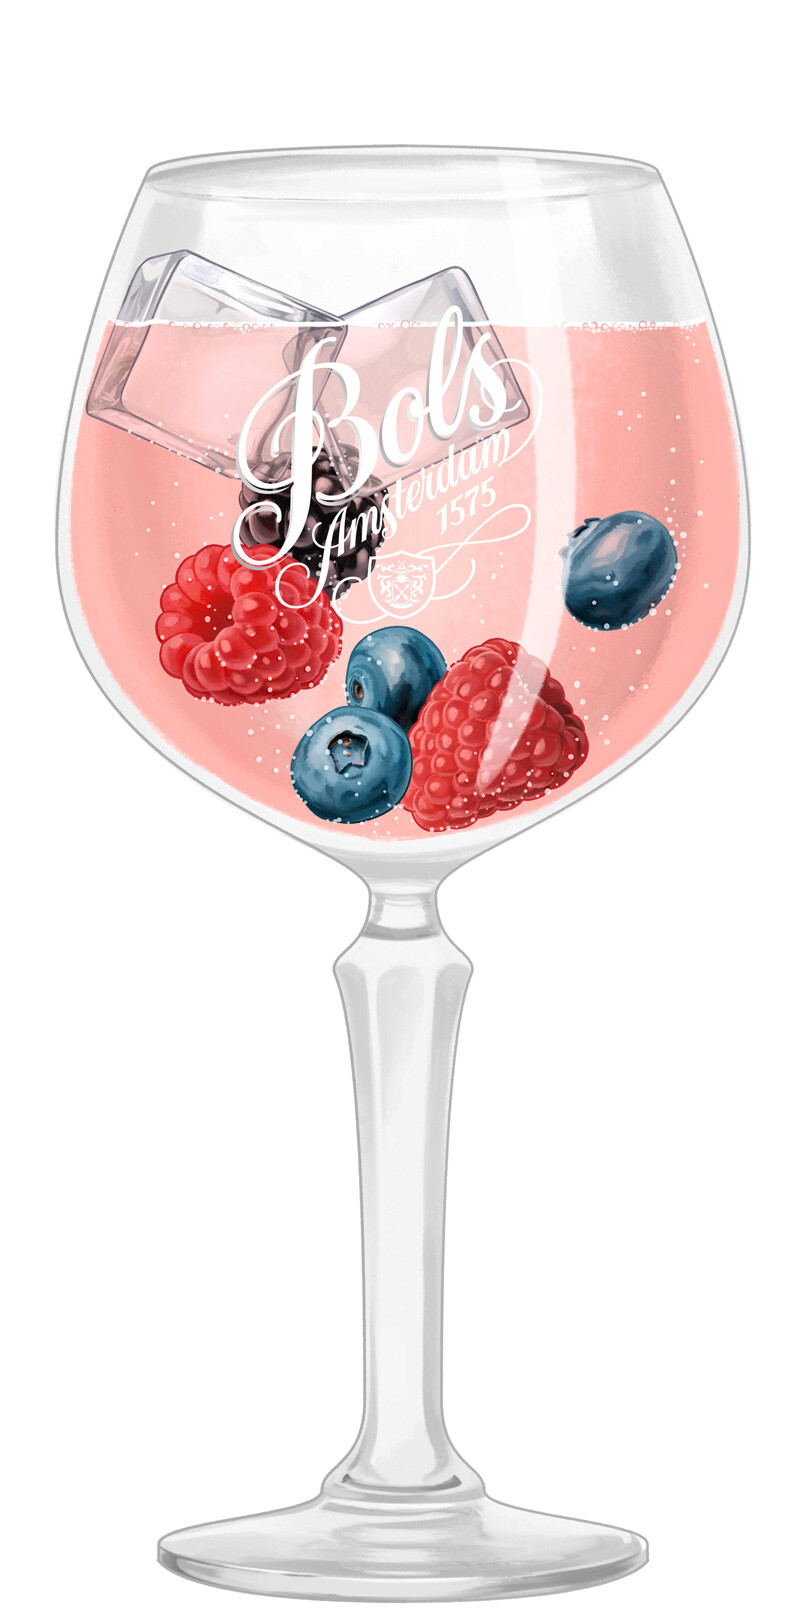 oculus-illustration-drink-aperitiv-berry